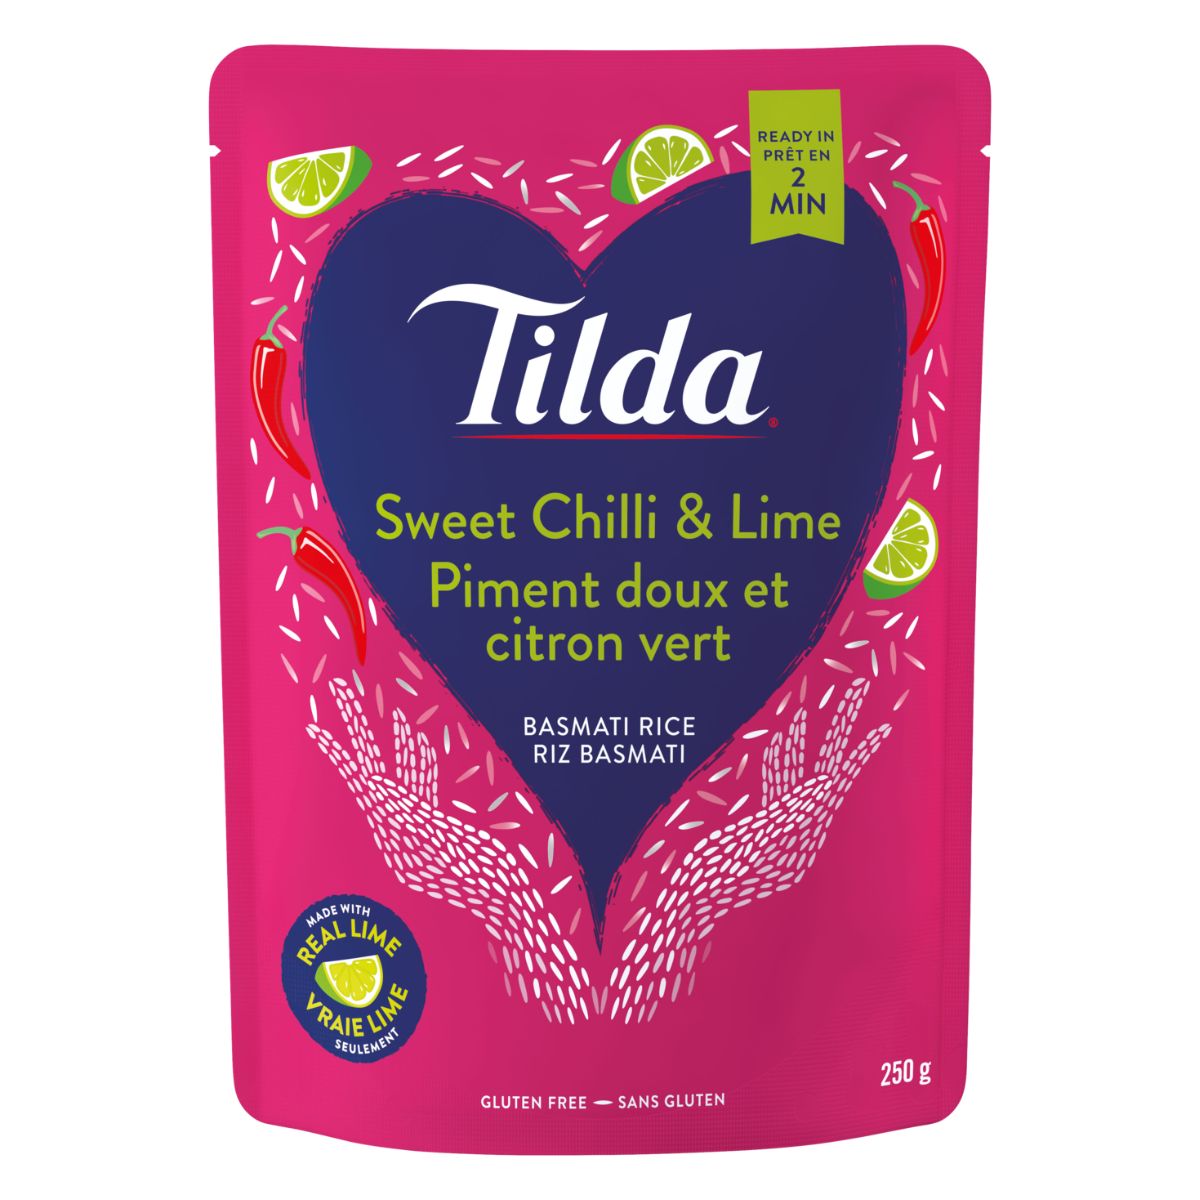 Tilda - Sweet Chilli & Lime Basmati Rice - 250g.